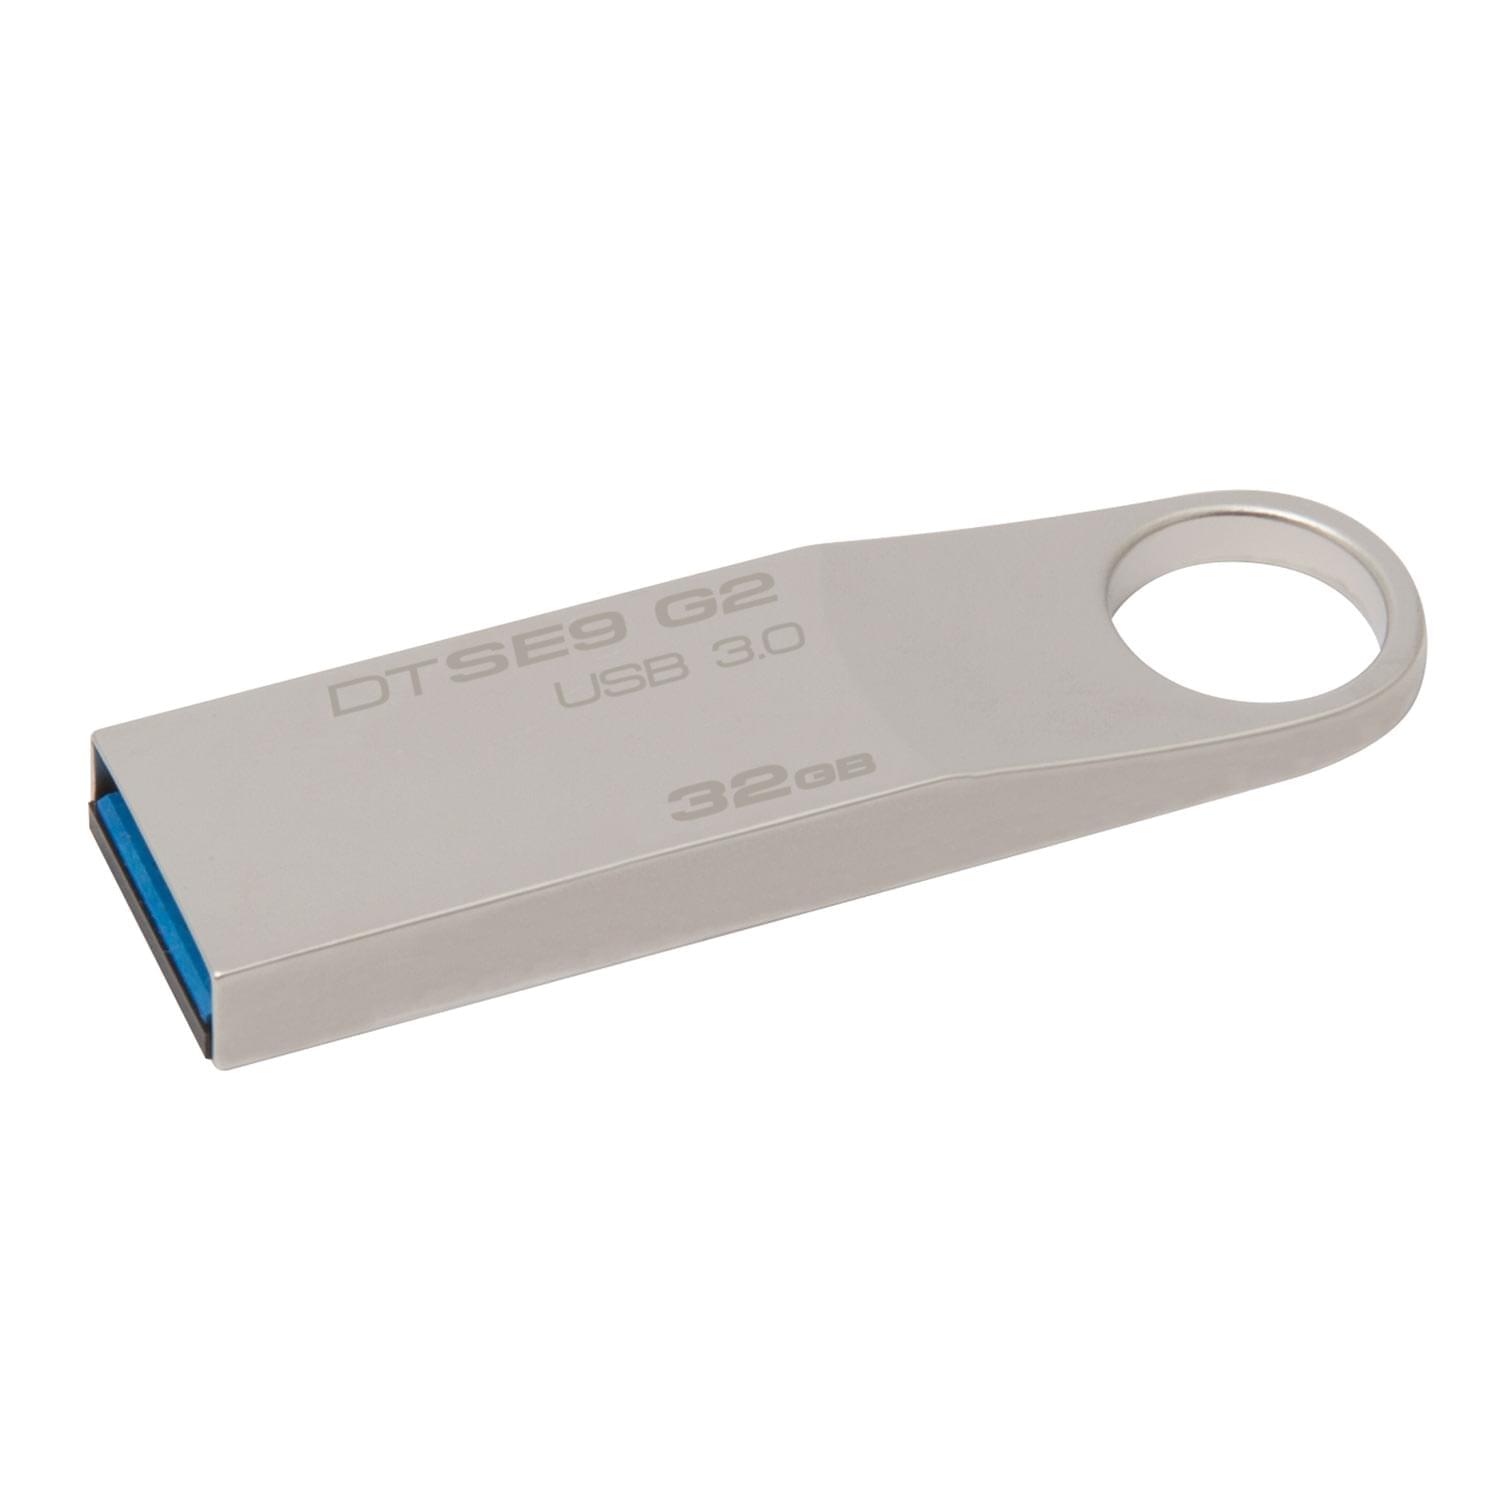 Clé USB Kingston Clé 32Go USB 3.0 SE9 G2 DTSE9G2/32GB (metal)